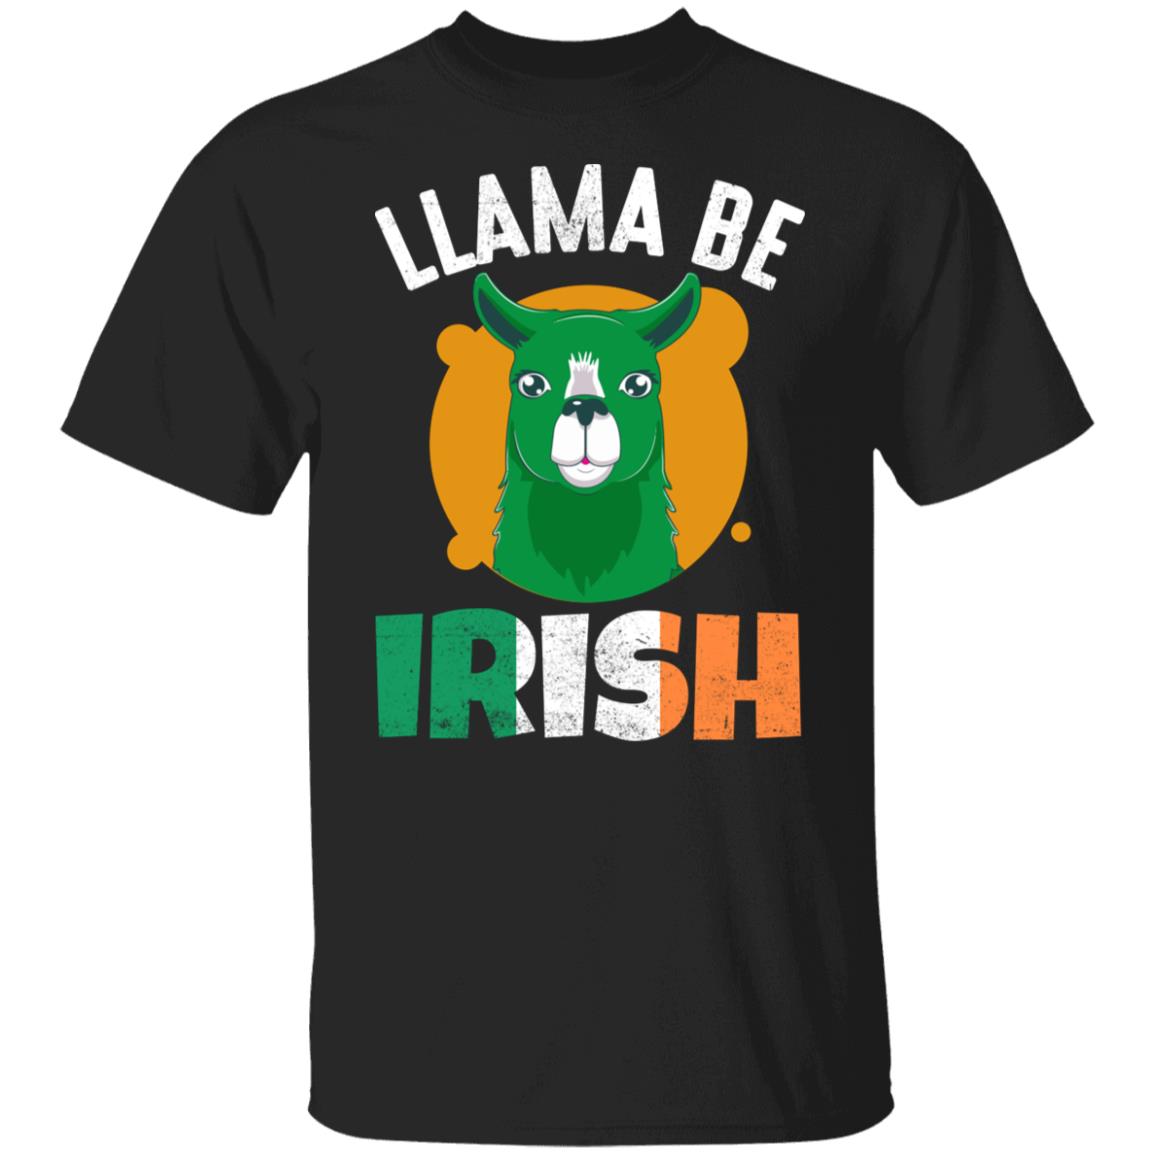 Llama Be Irish Funny St Patrick's Day Shirt